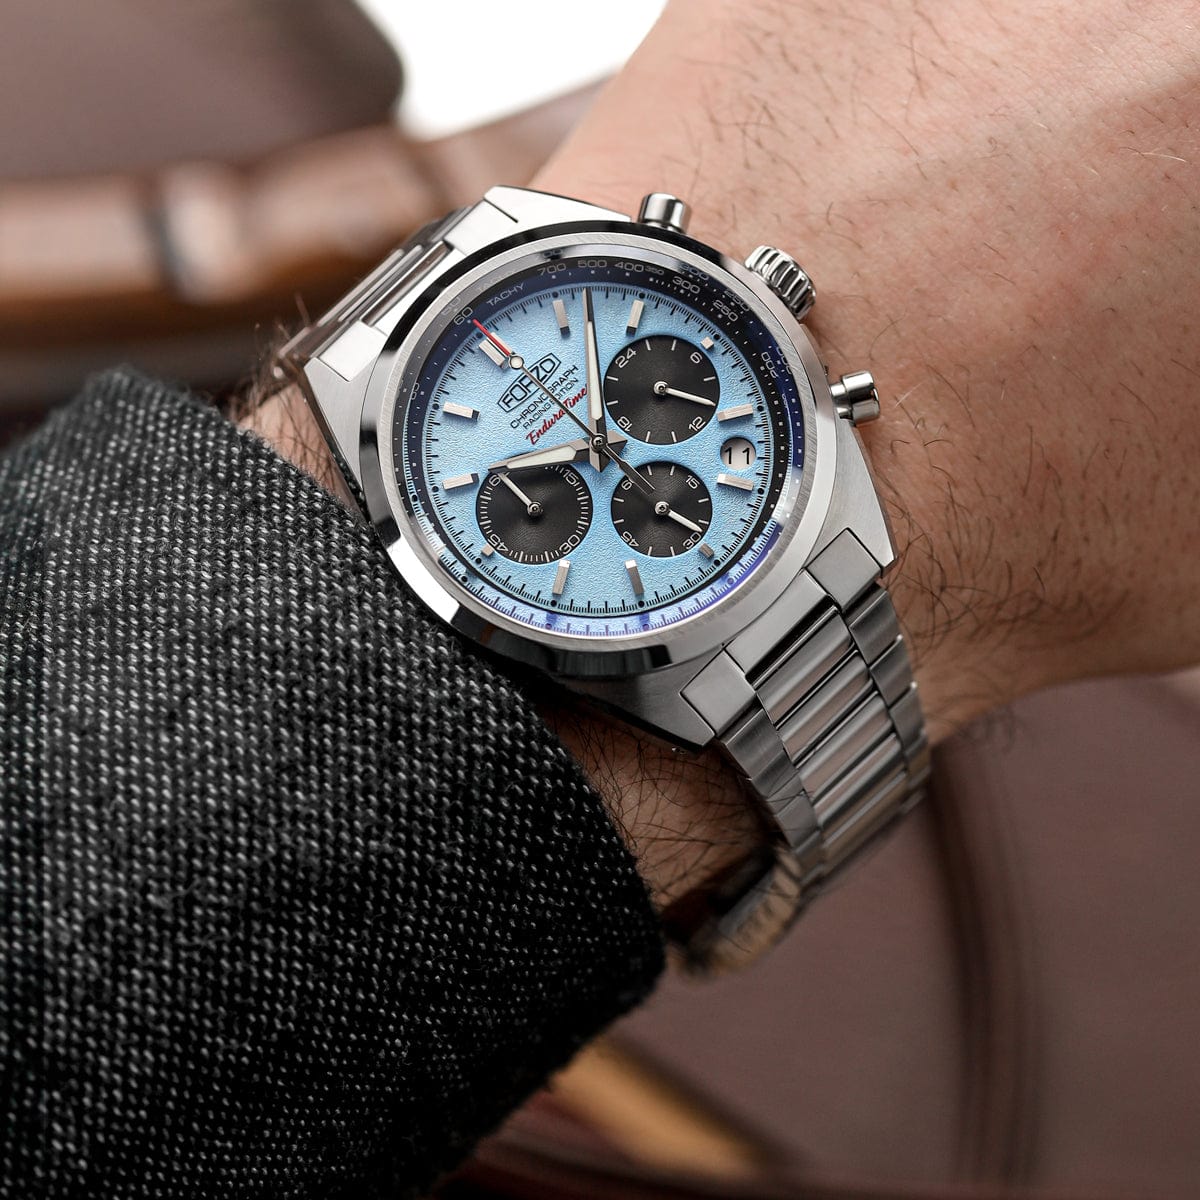 FORZO G1 EnduraTimer Chronograph Watch - Light Blue Dial - NEARLY NEW